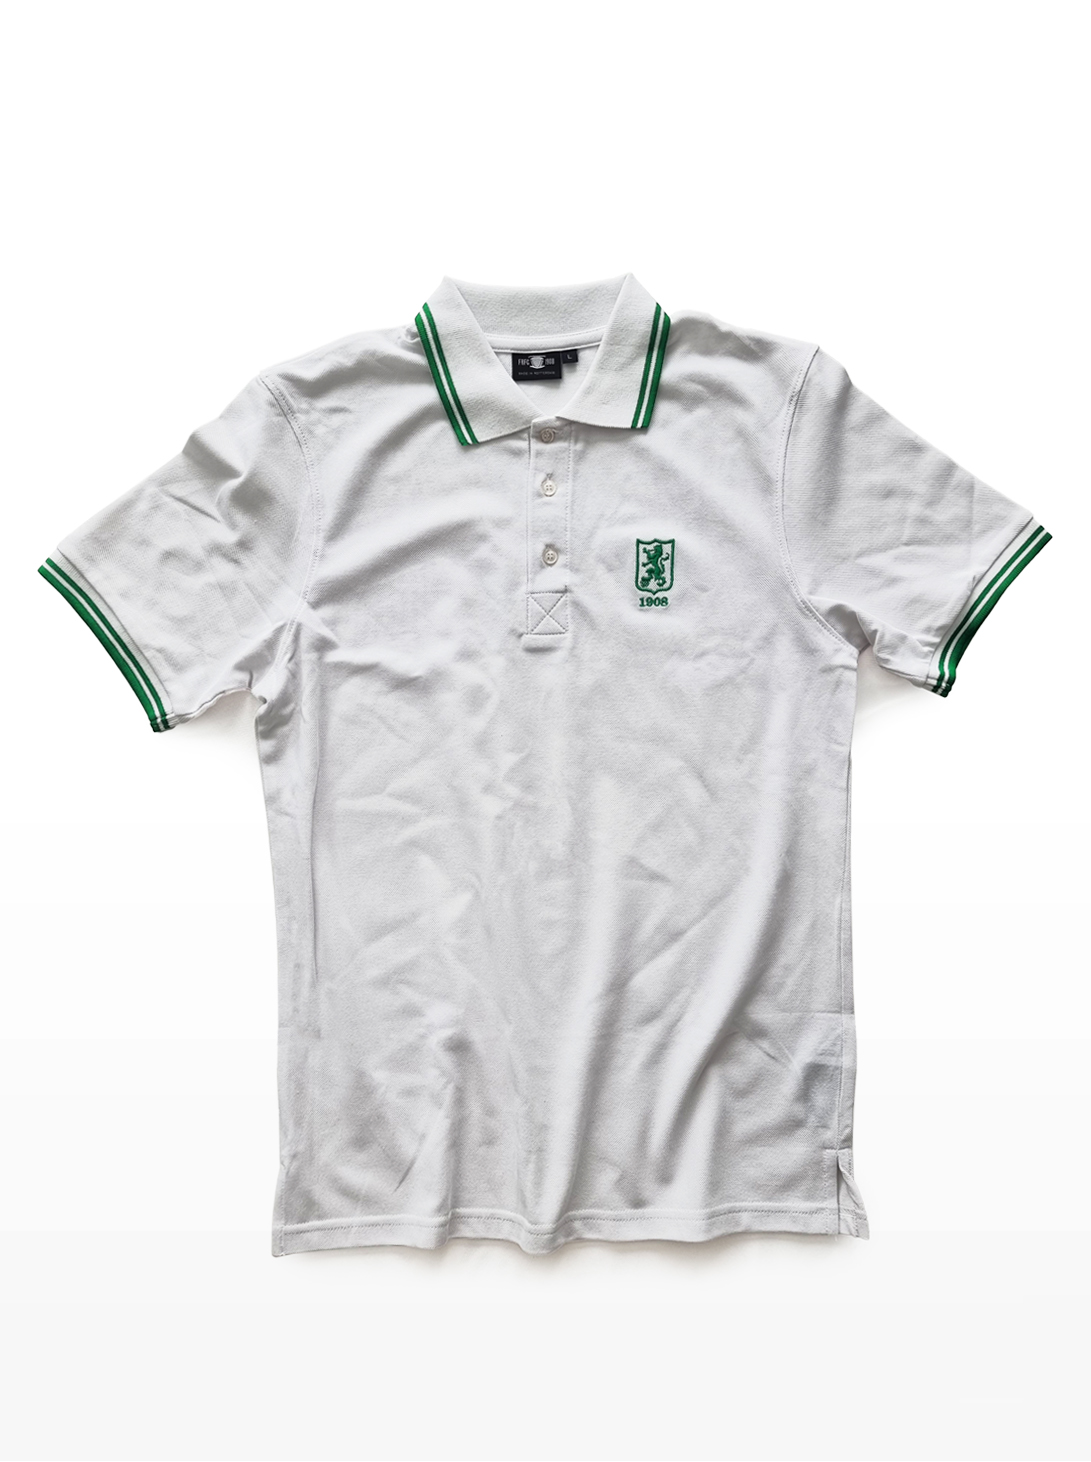 FRFC1908 Polo - Wit (groen/wit/groen) - Voorkant